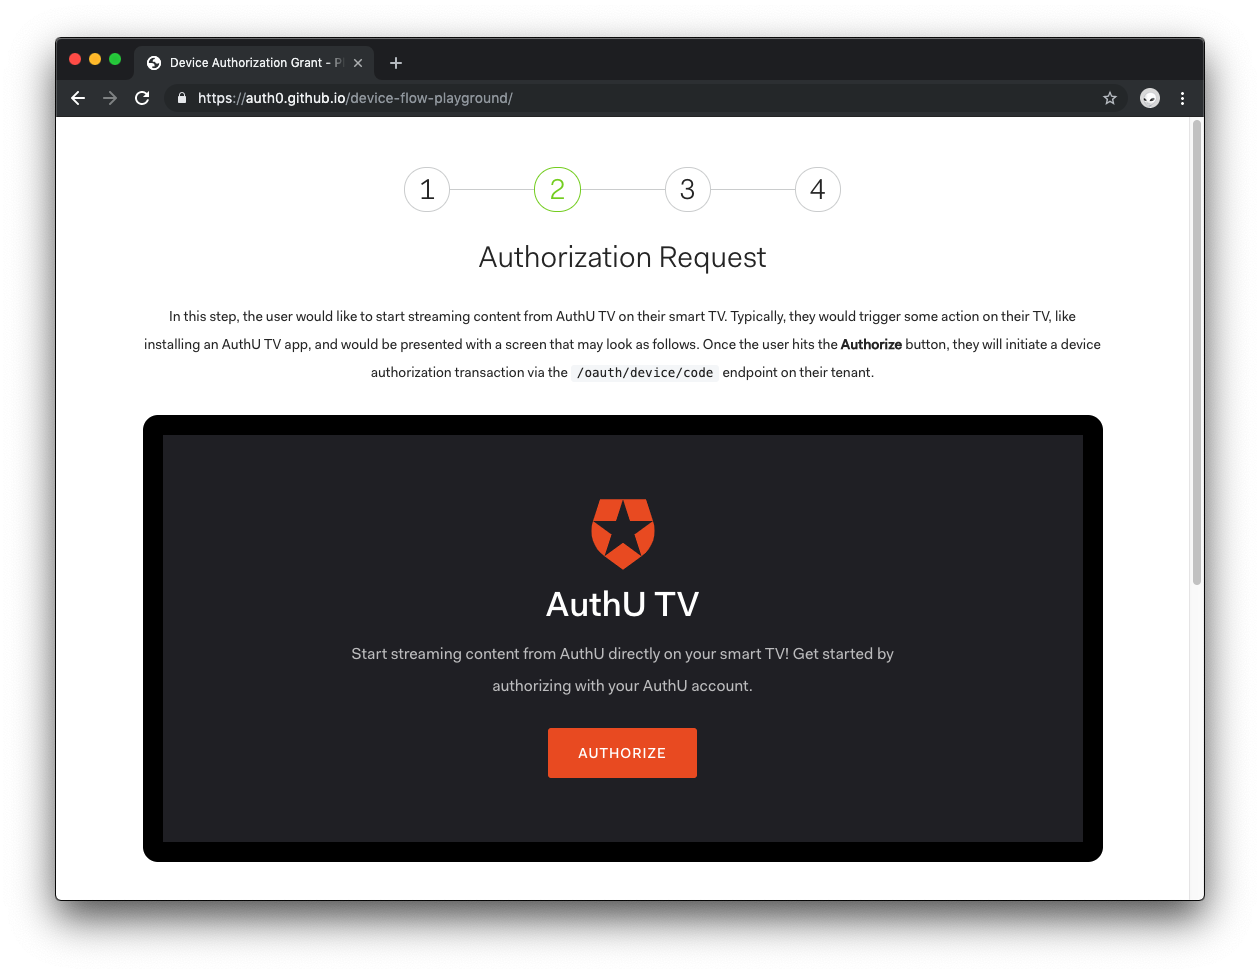 Auth0 Device Flow: authorization request